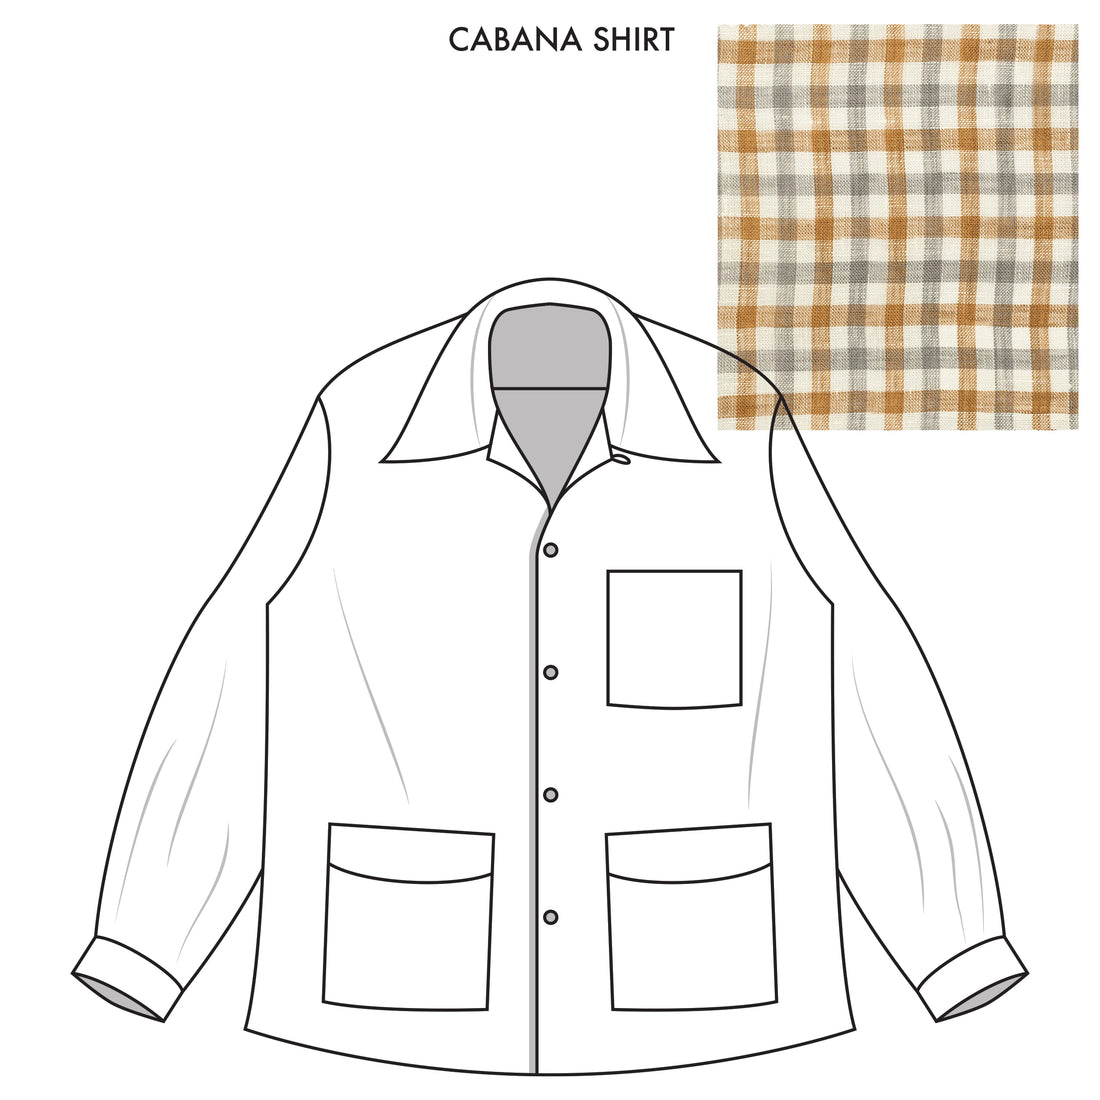 Bryceland's Cabana Shirt Made-to-Order Brown/Grey